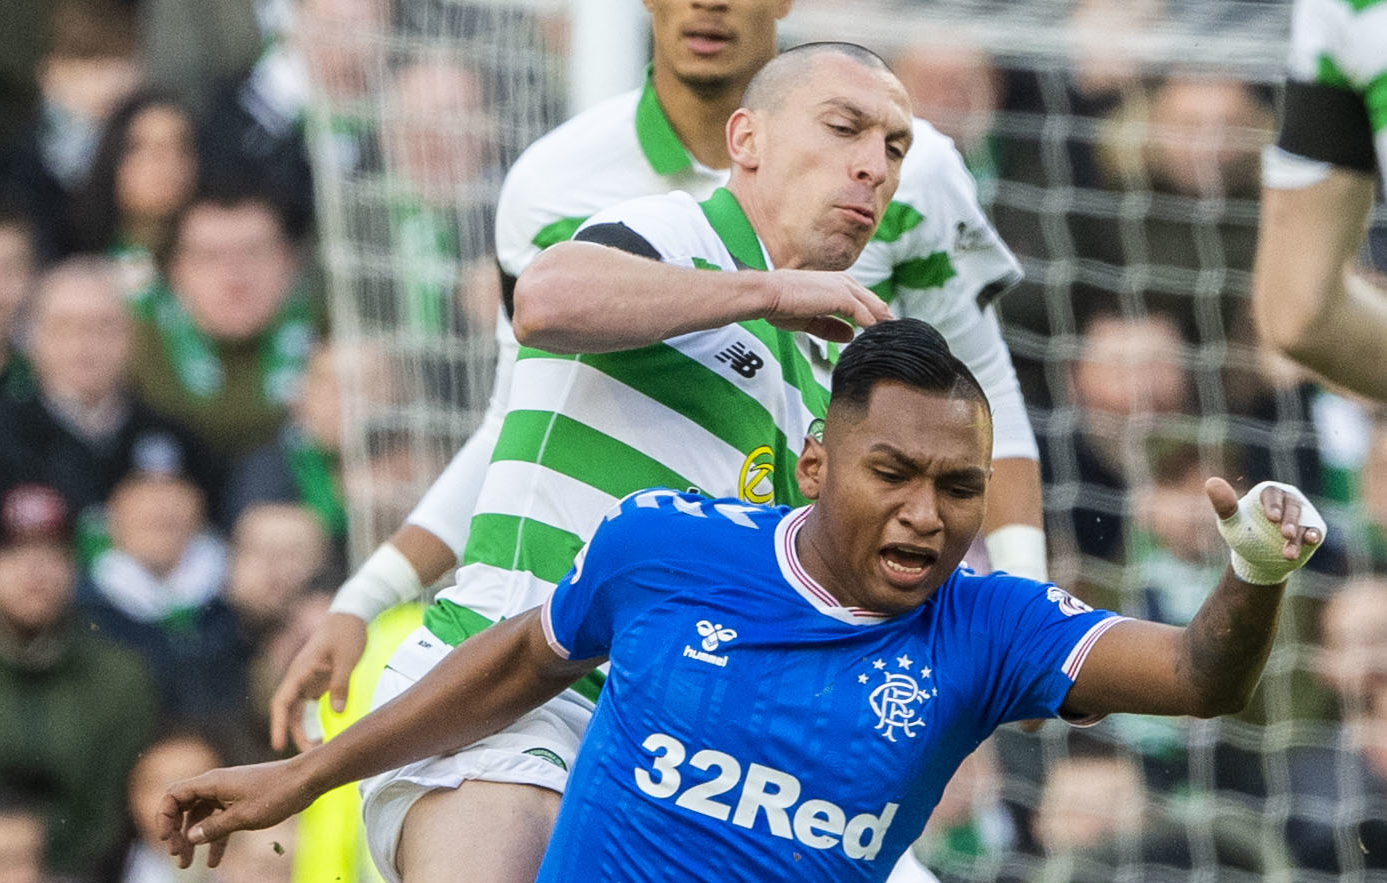 Celtic's Scott Brown tackles Rangers' Alfredo Morelos